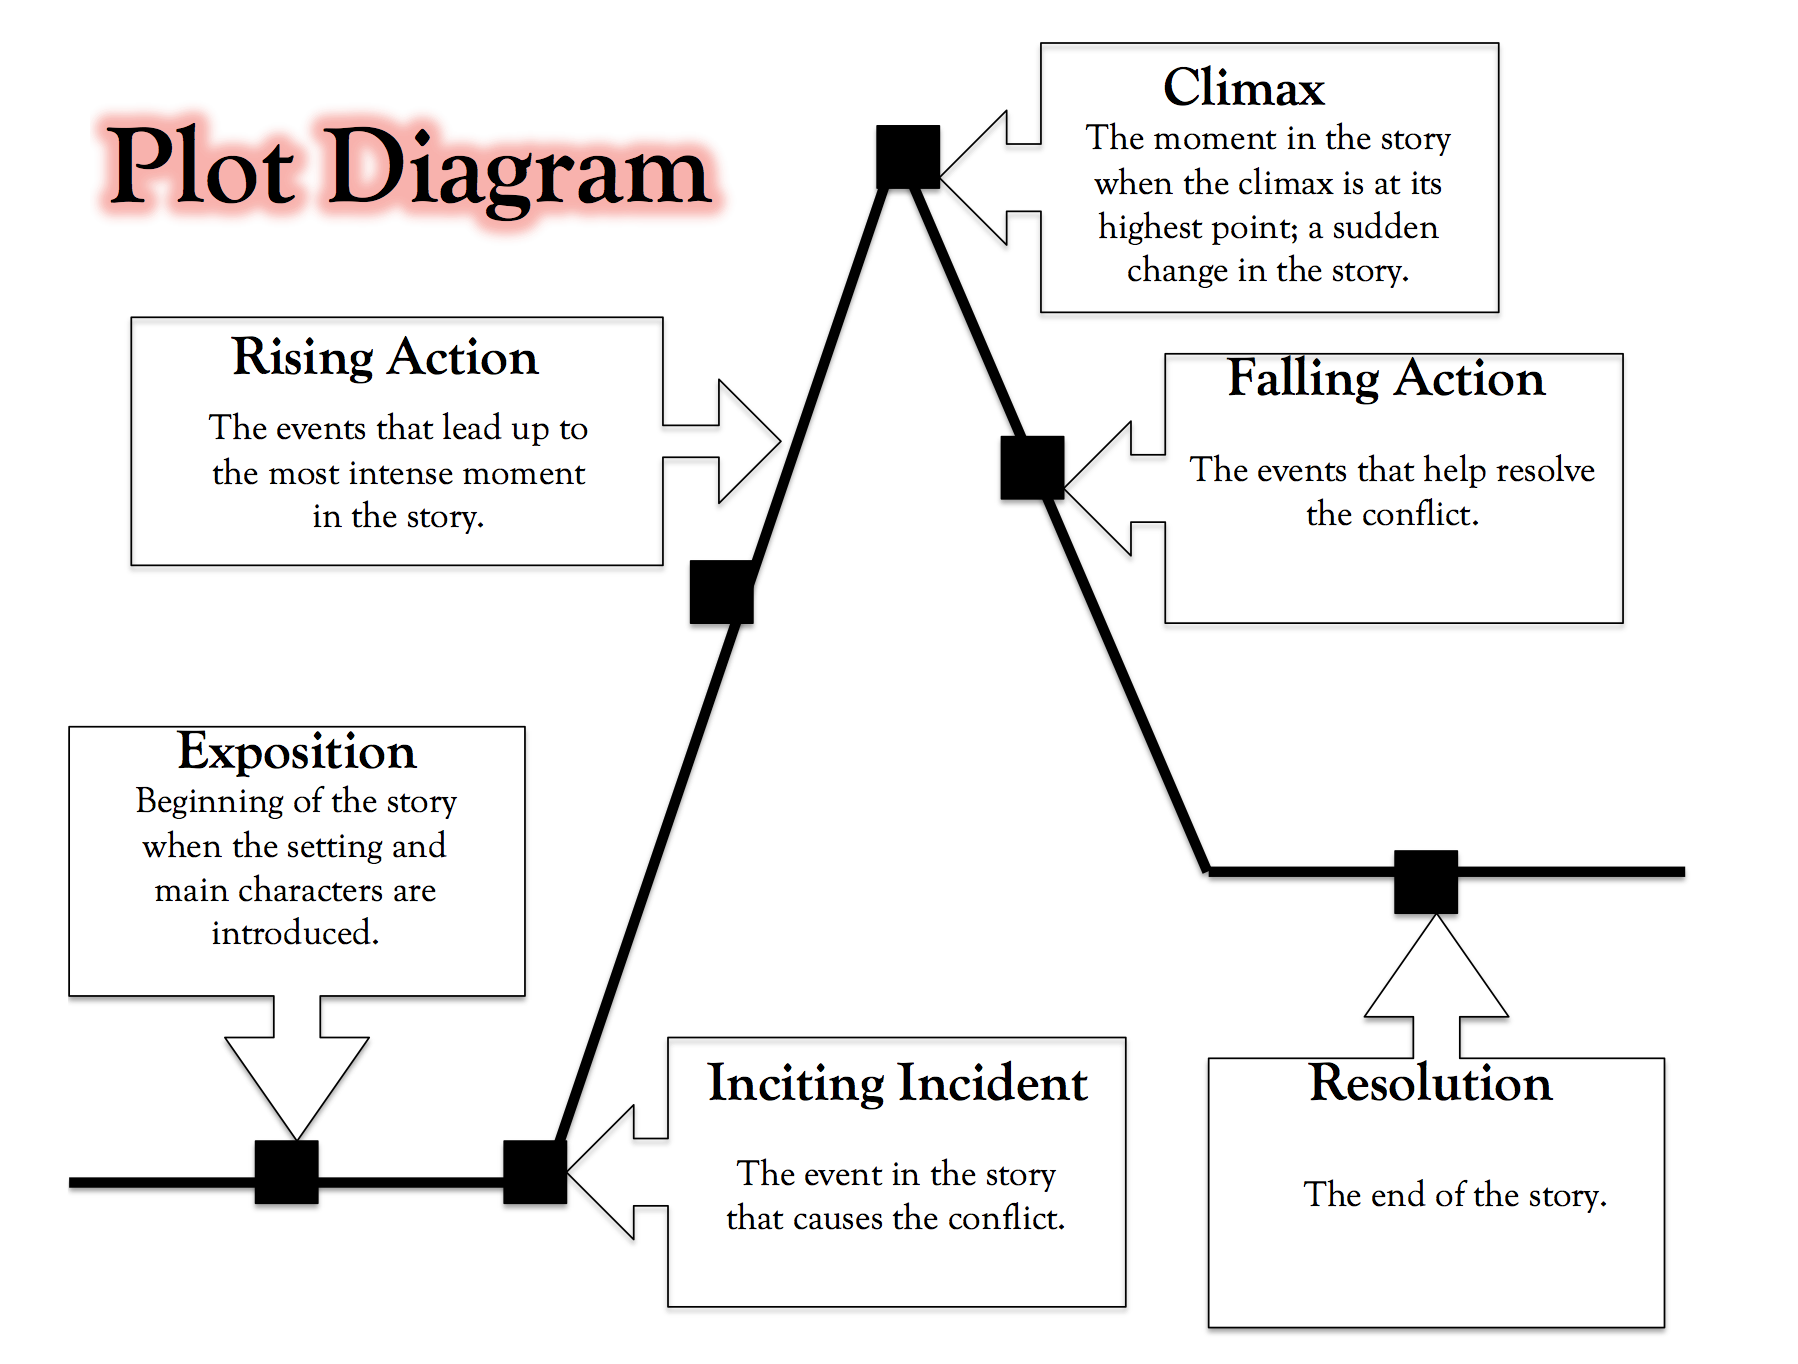 [DIAGRAM] Stolen Party Story Plot Diagram - MYDIAGRAM.ONLINE